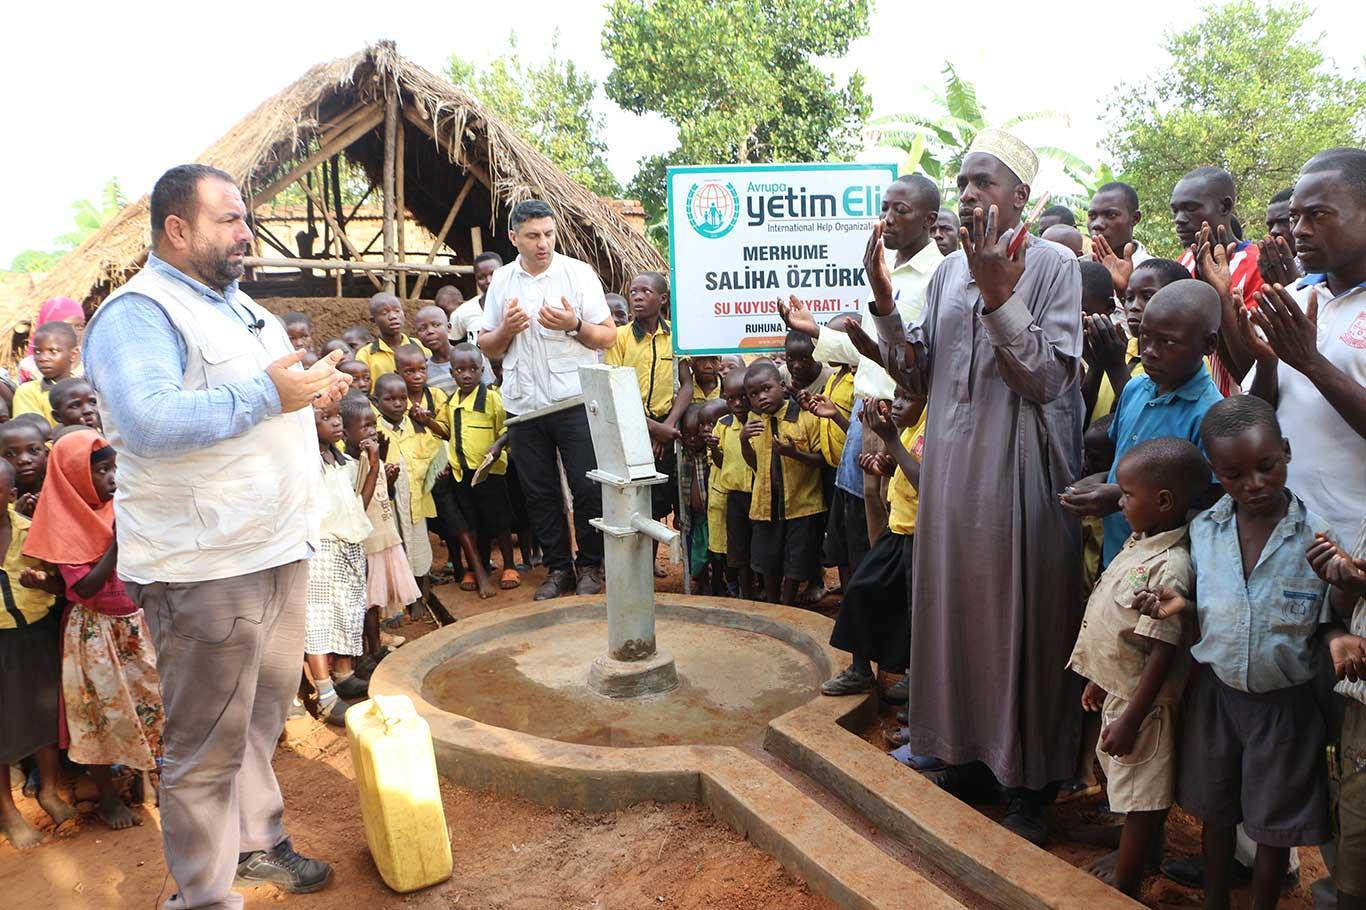 European Yetim Eli inaugurates fresh water wells in Uganda